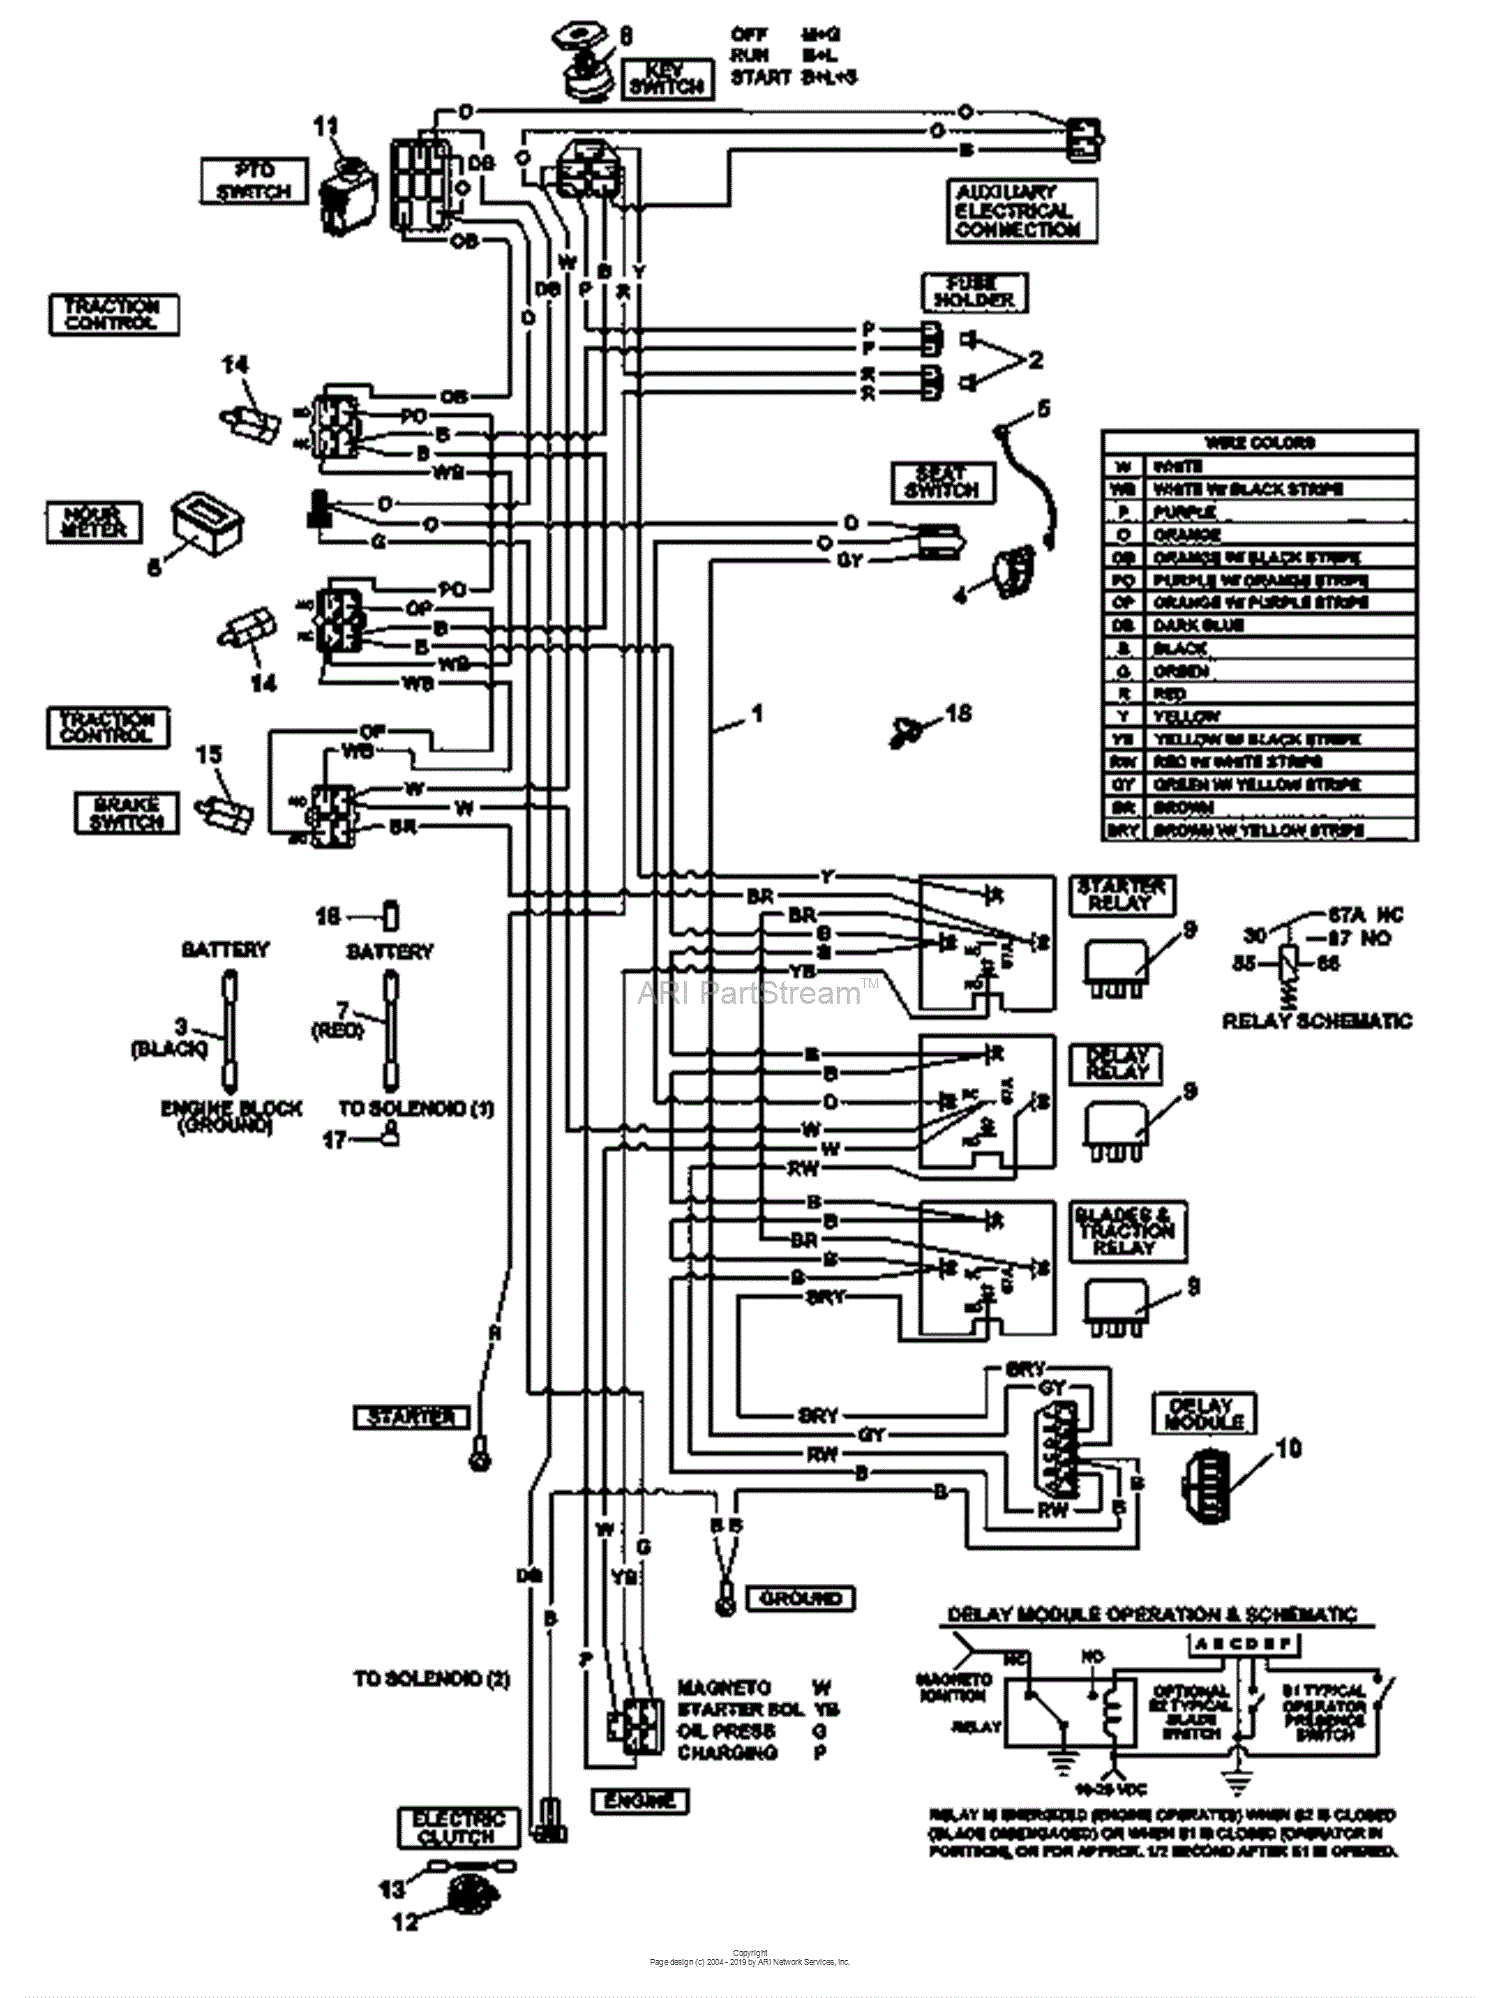 Sony Wiring Harness Diagram from az417944.vo.msecnd.net